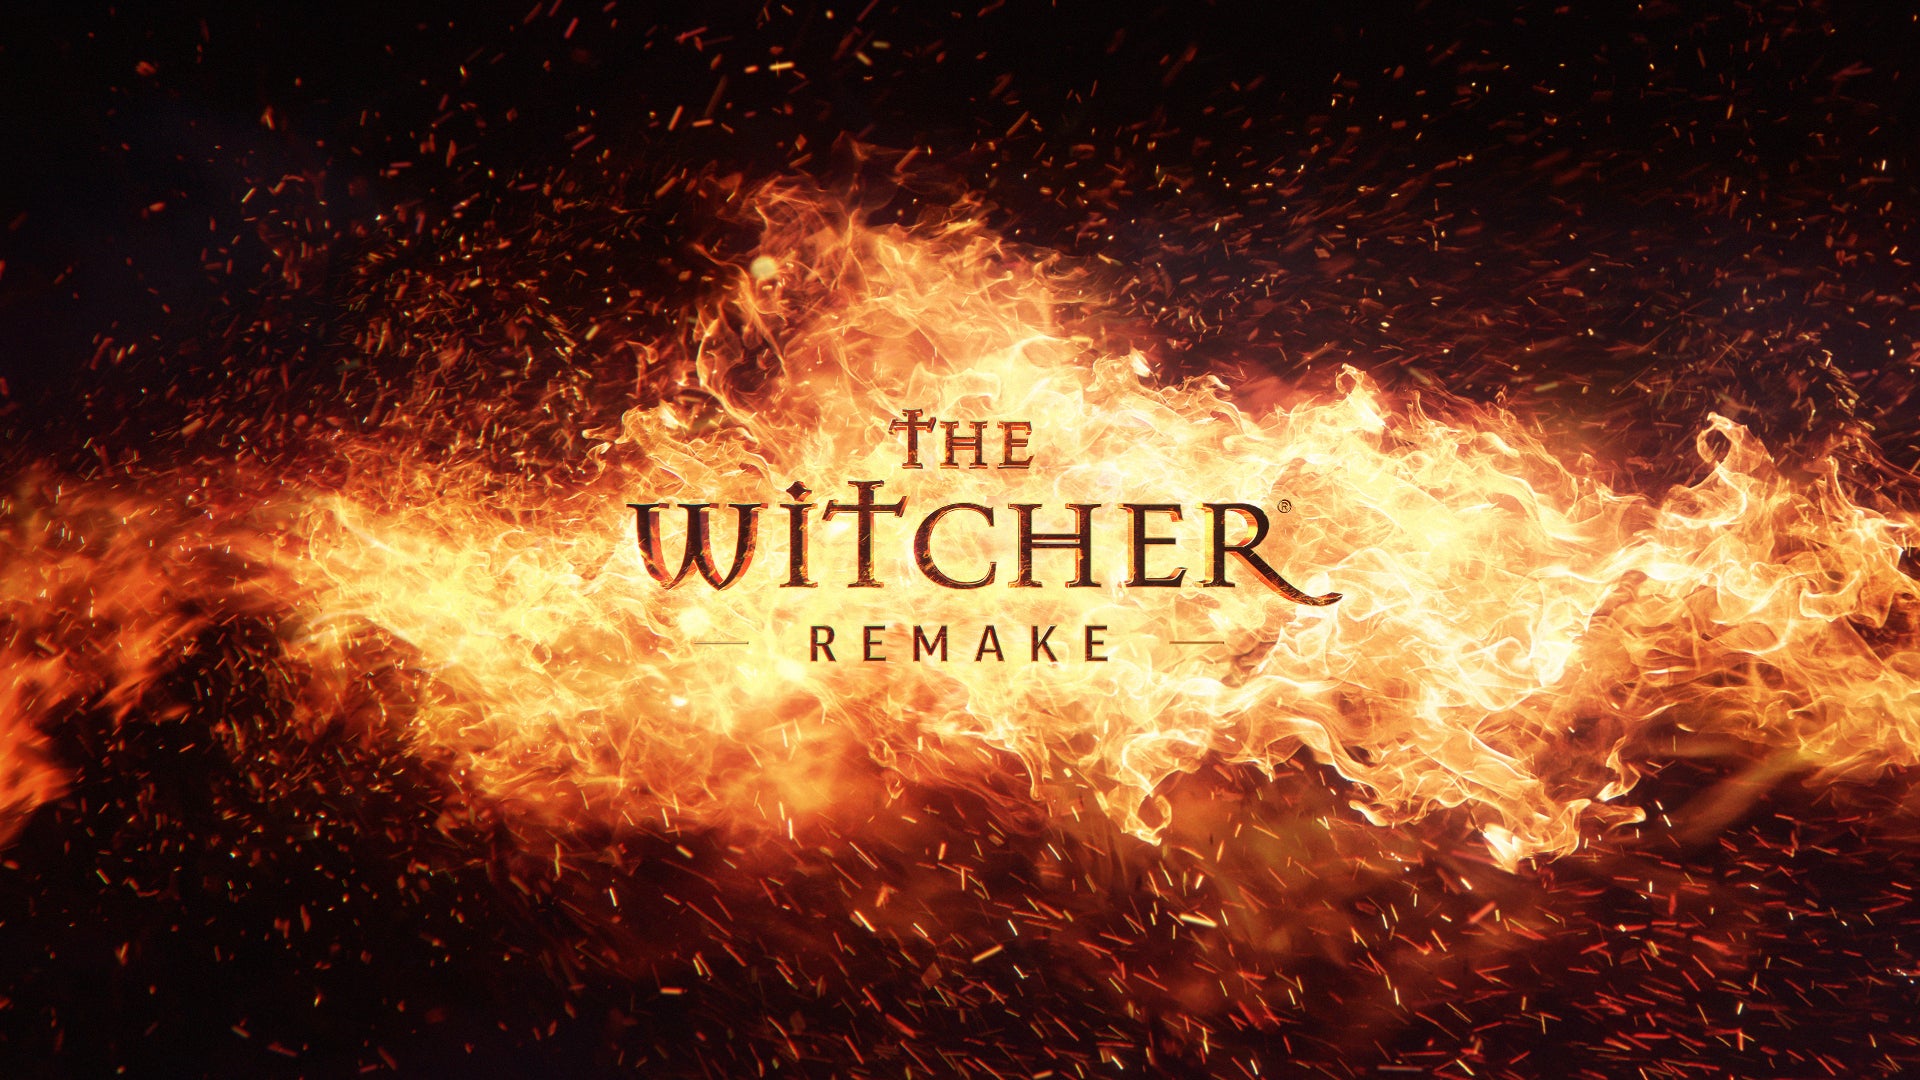 CD Projekt Red revela codinome “Canis Majoris” como The Witcher Remake